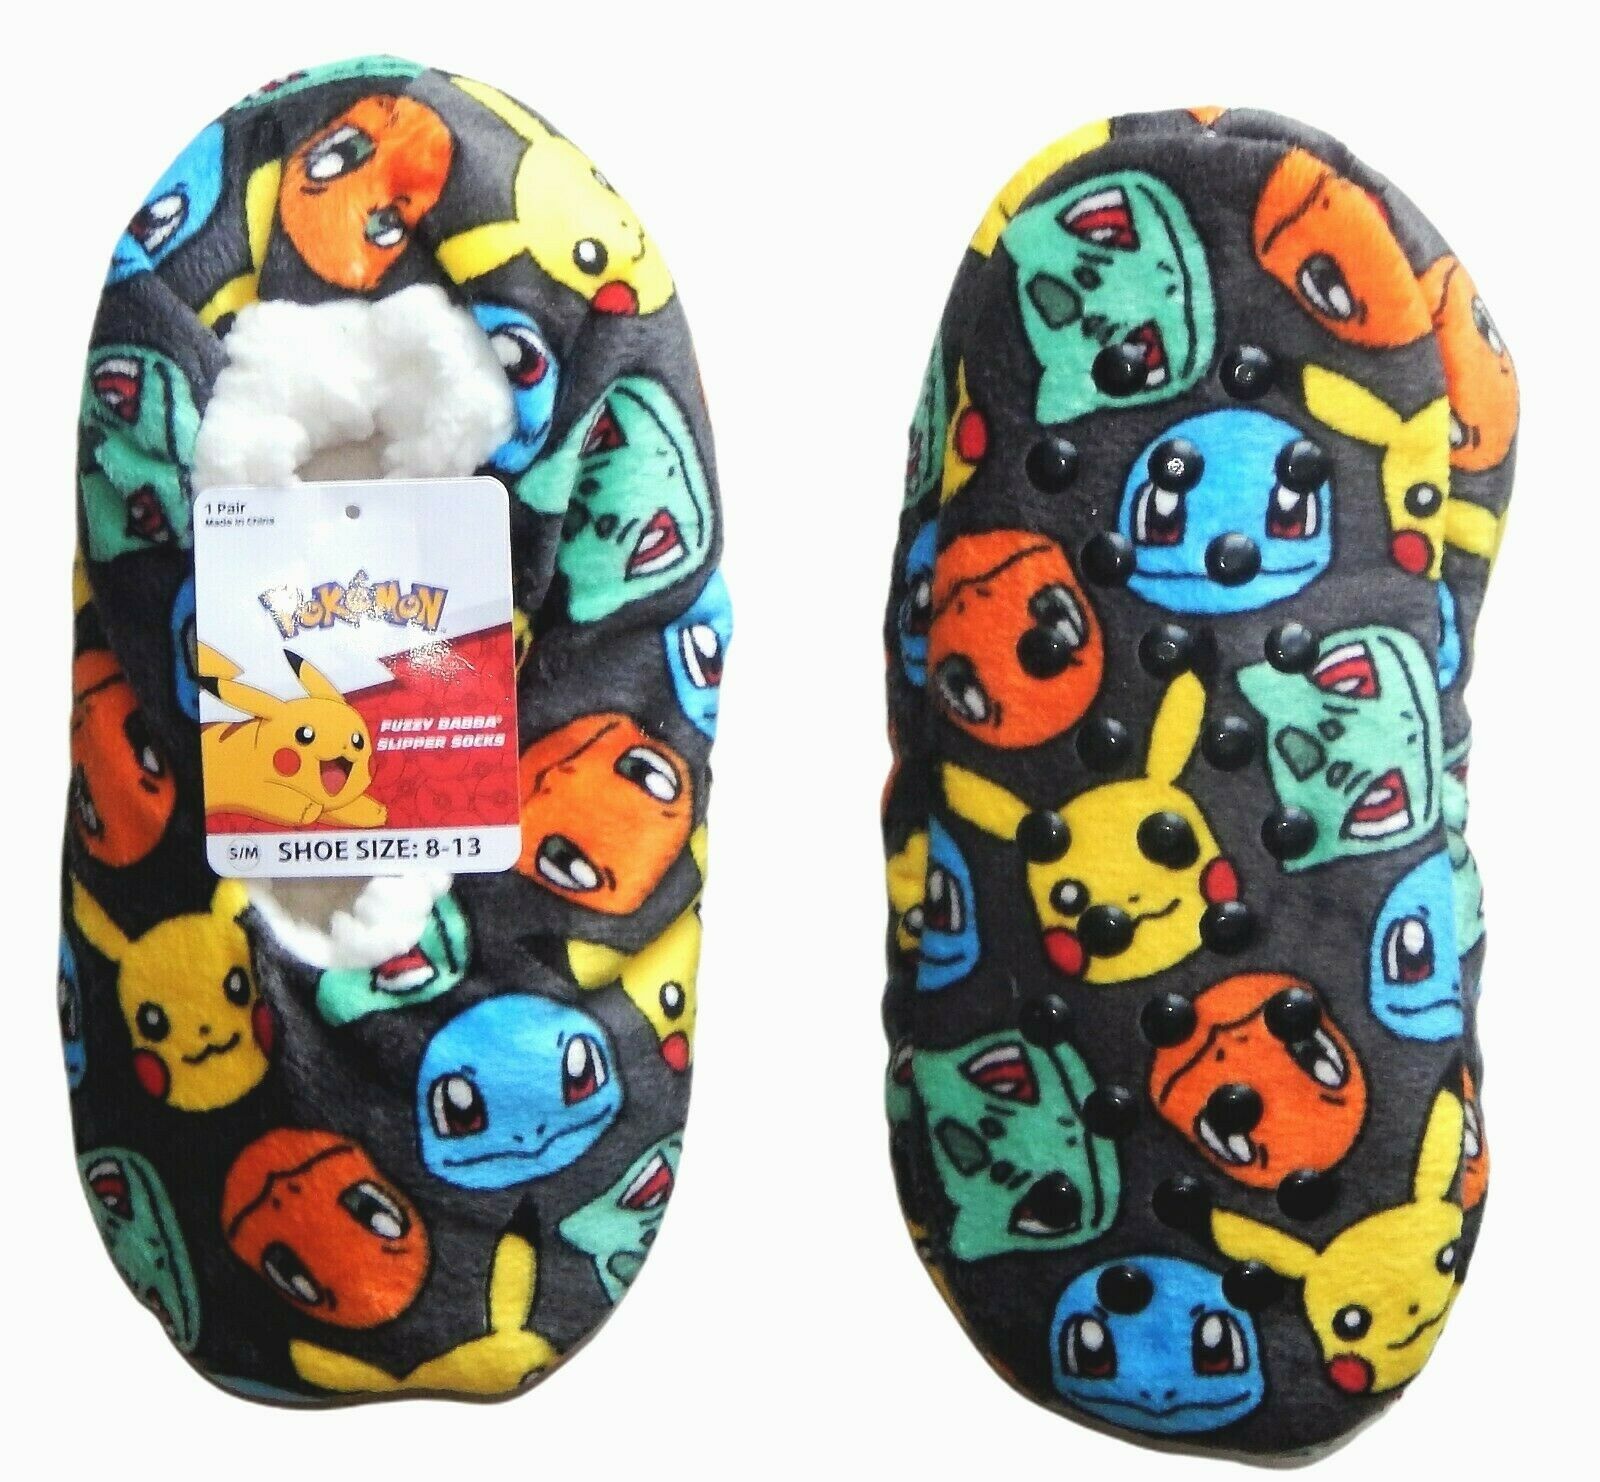 Pokemon pikachu nintendo boys wave babba slippers size s/m (8-13) or m/l